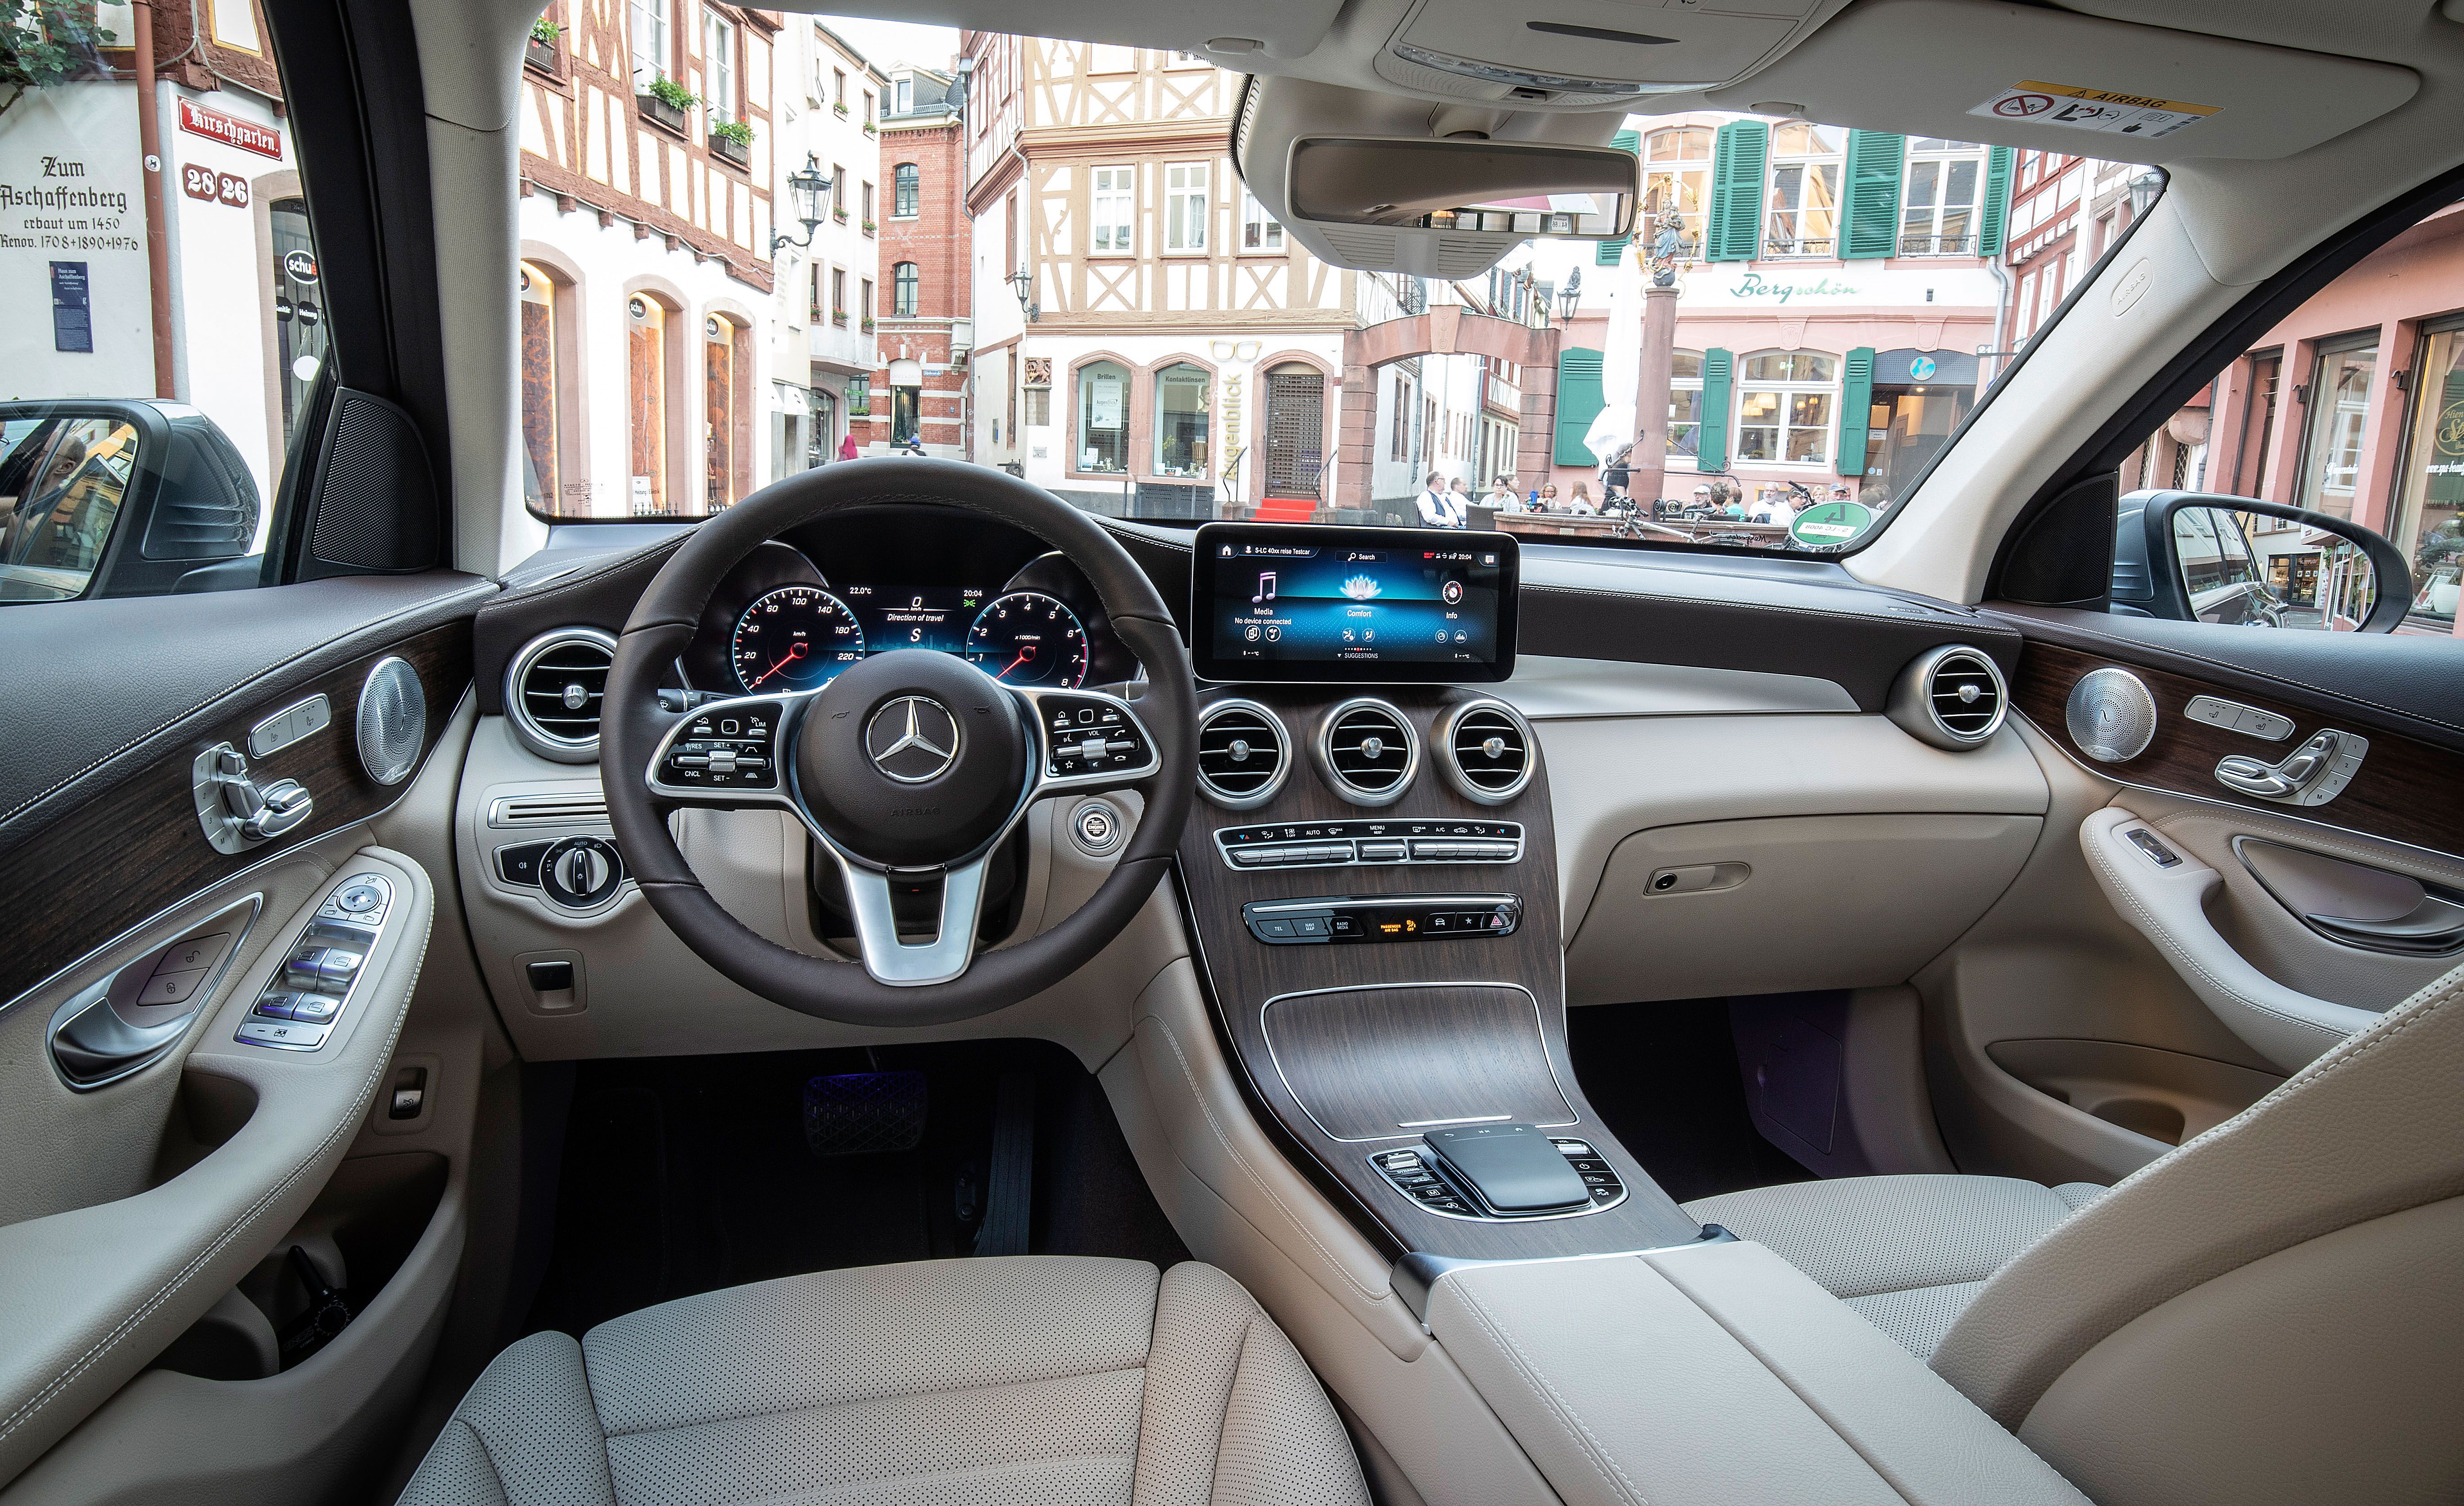 Mercedes GLC-Class (X253) exterior specifications